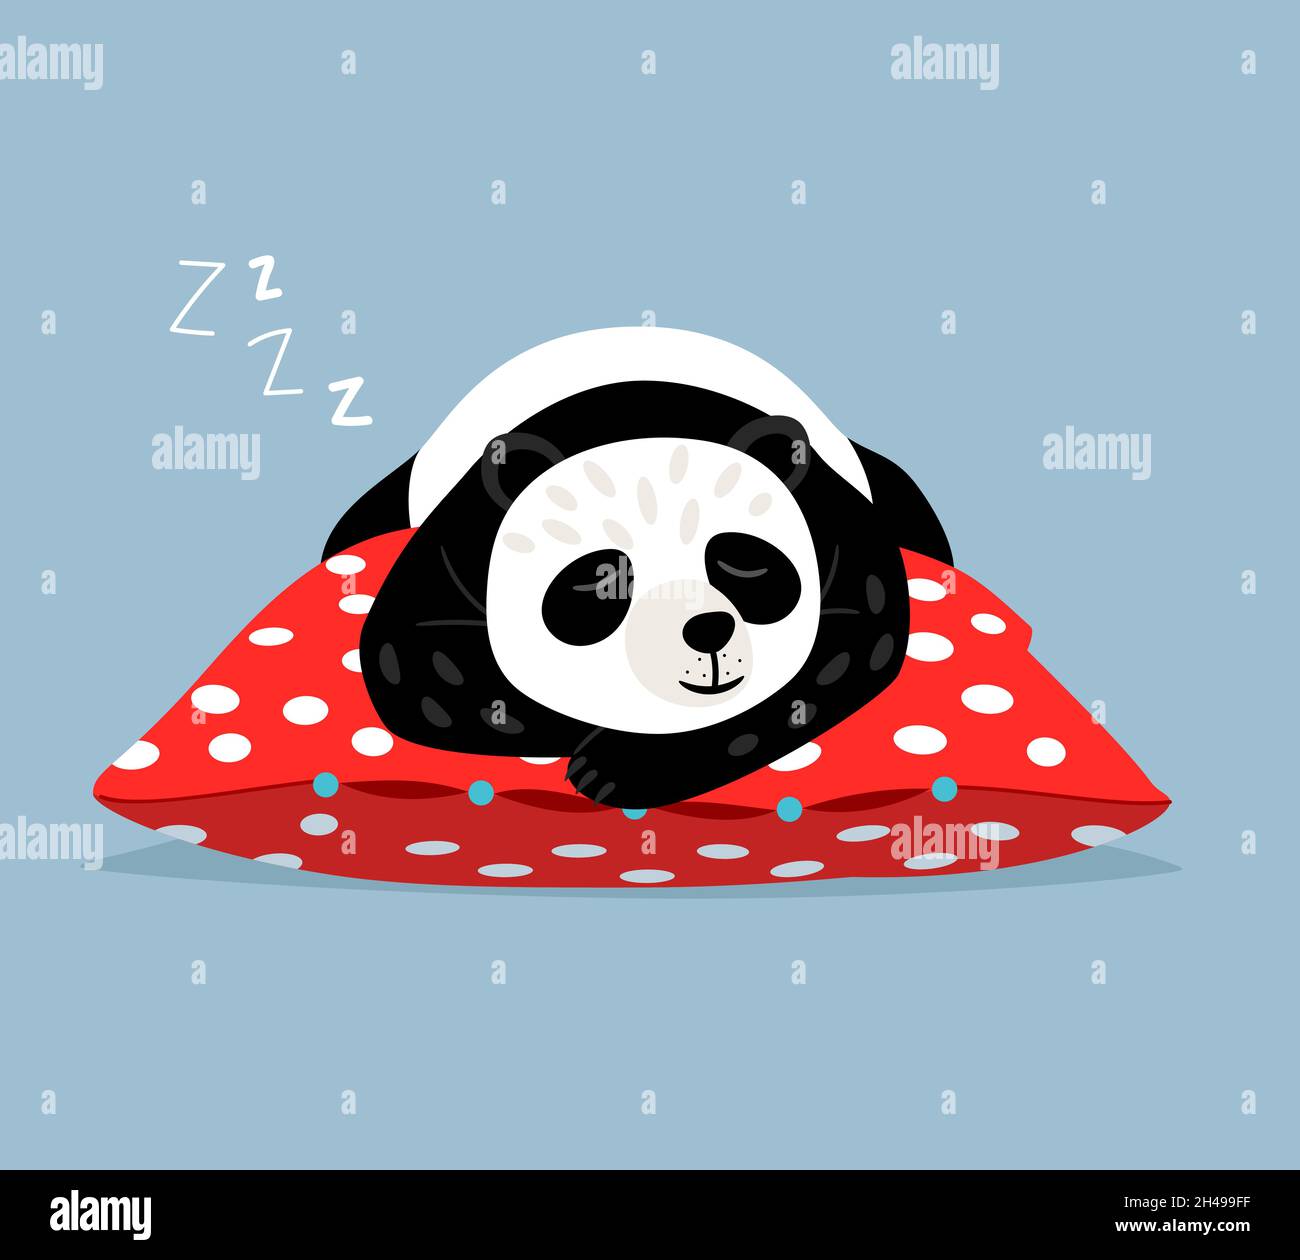 Panda durmiendo. Lindo perezoso asiático sobre almohada roja con lunares,  cansado sueño comic animales osos vector ilustración de dibujos animados,  kawaii relajarse fin de semana personaje mascota aislado en azul Imagen  Vector